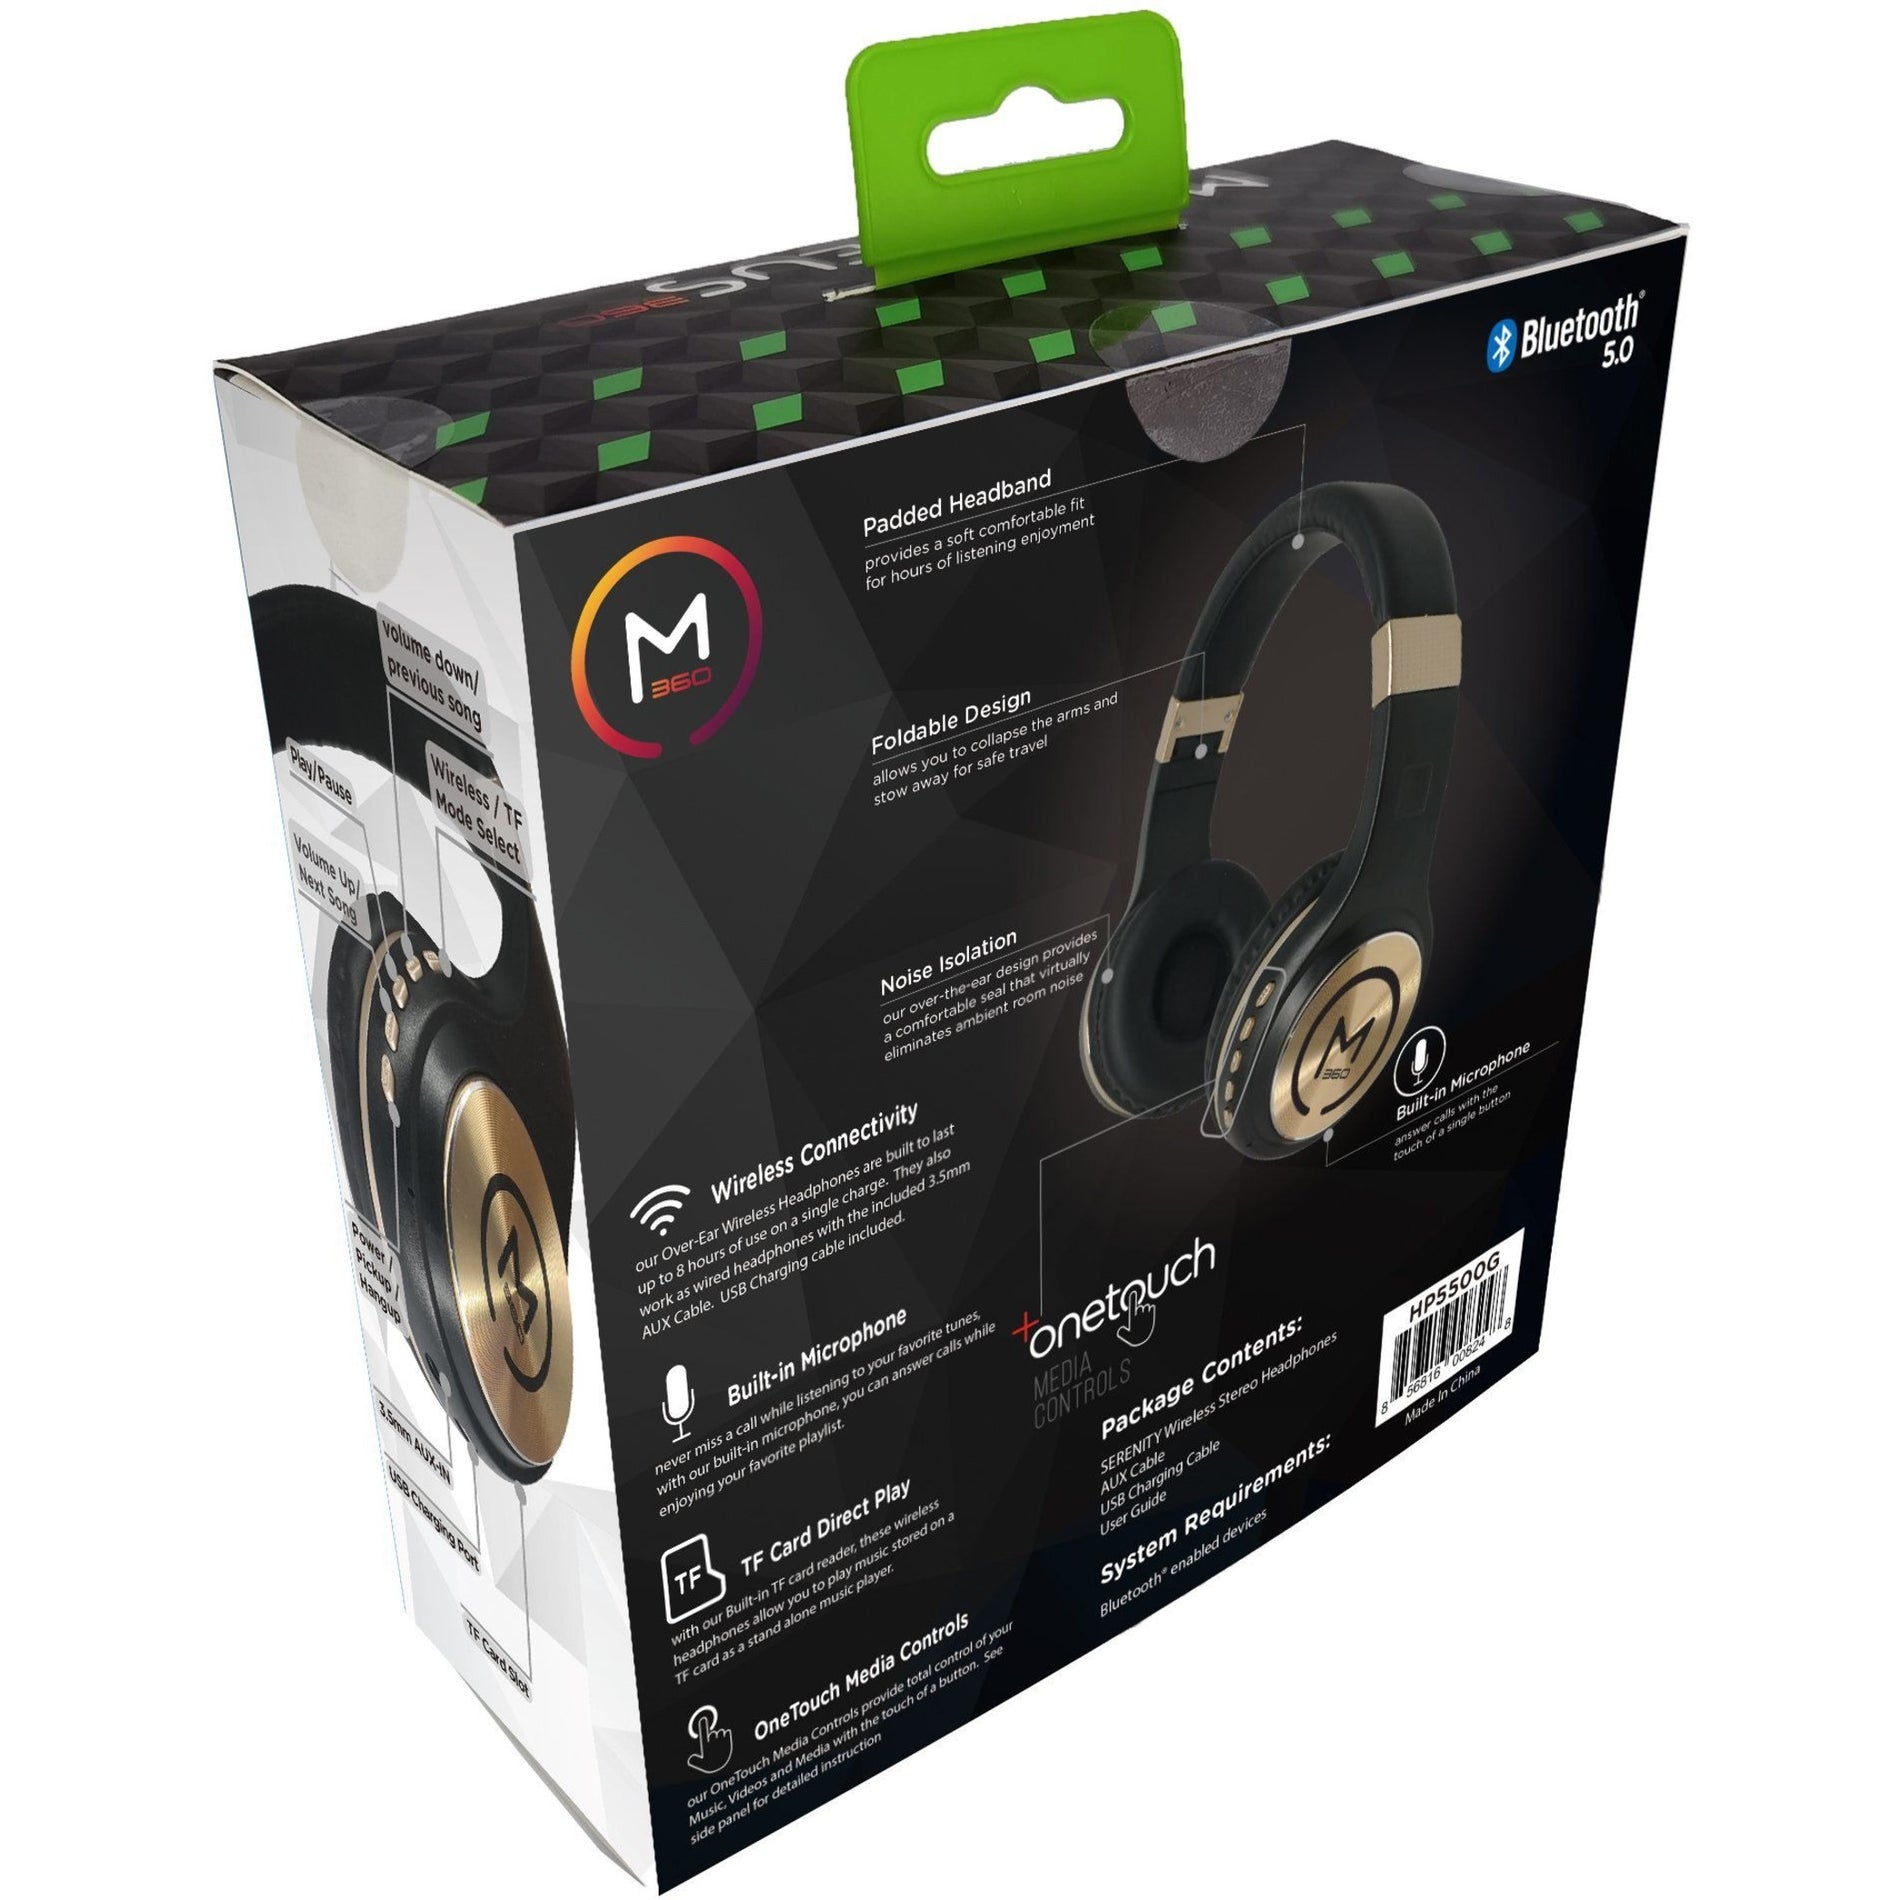 Morpheus 360 HP5500G Wireless Stereo Bluetooth Headphones, Black/Gold, Built-in Microphone